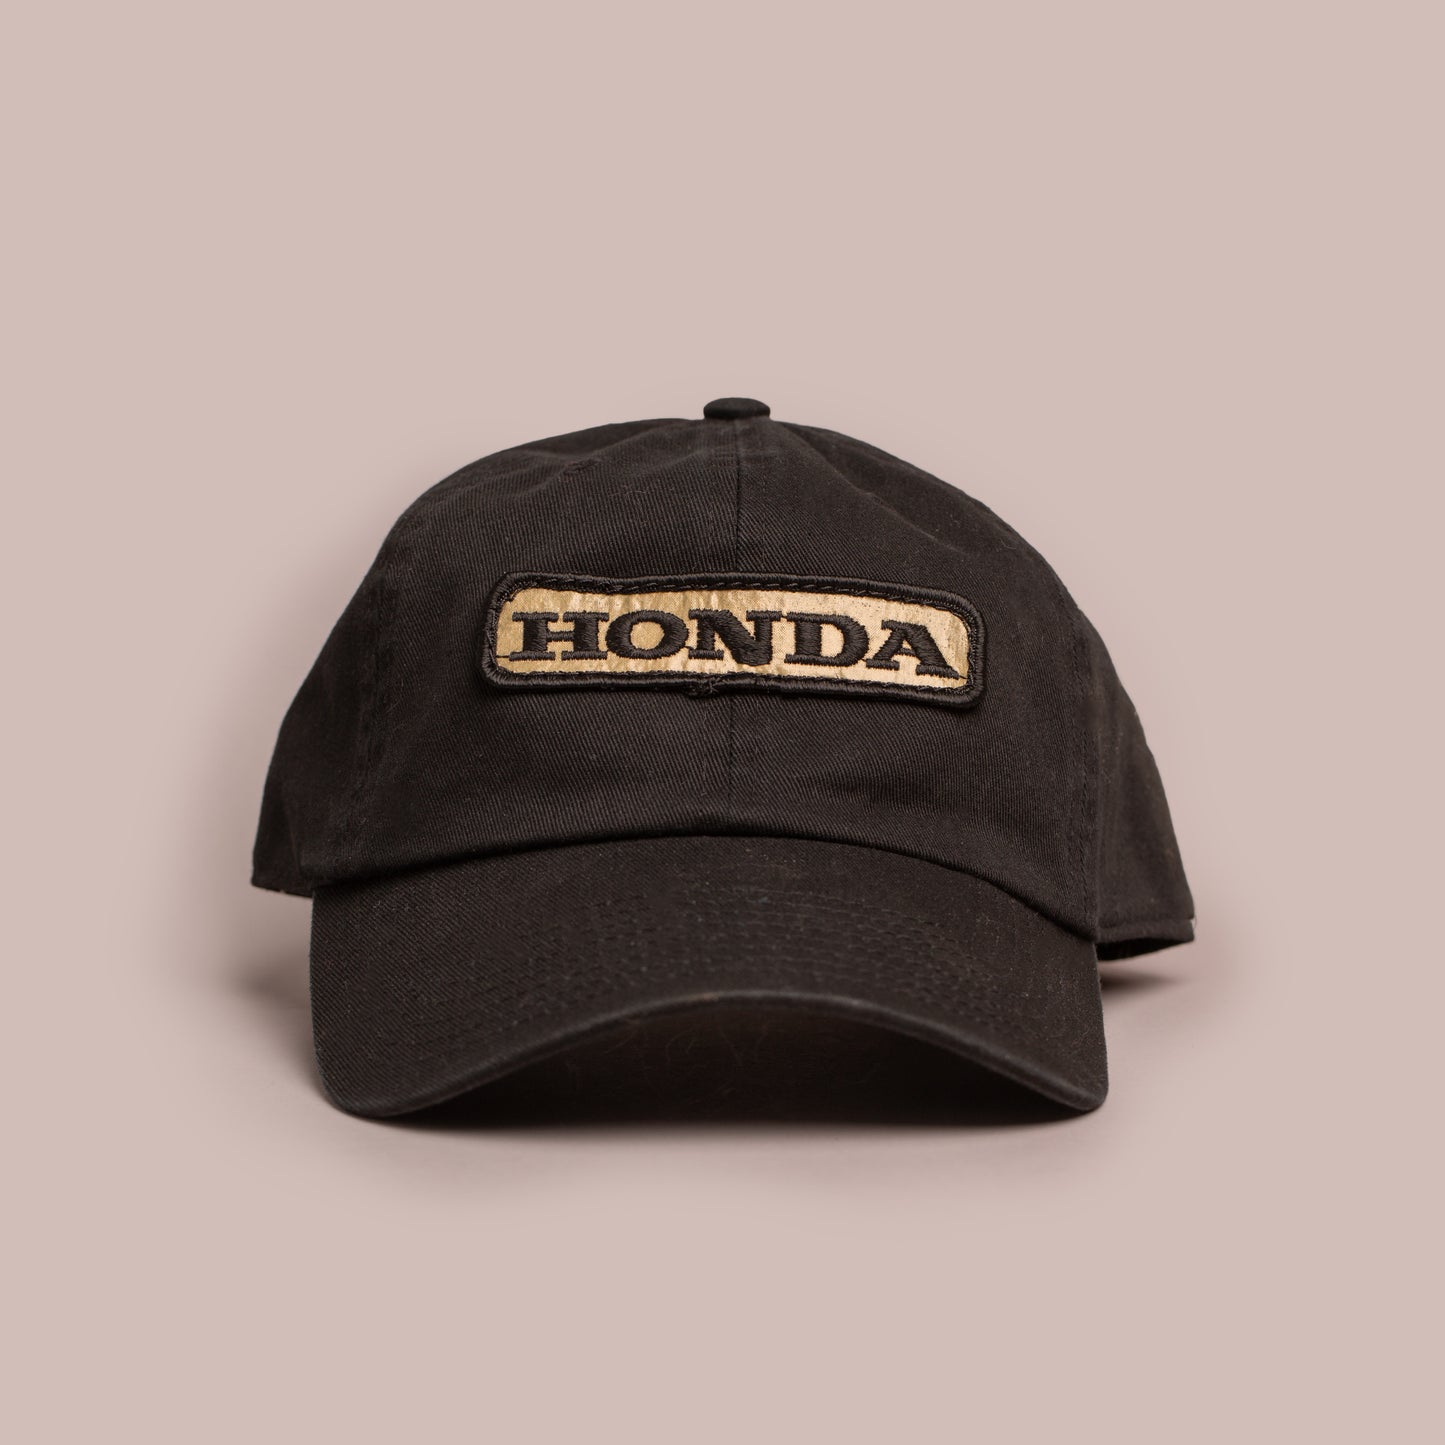 Honda Dad Cap